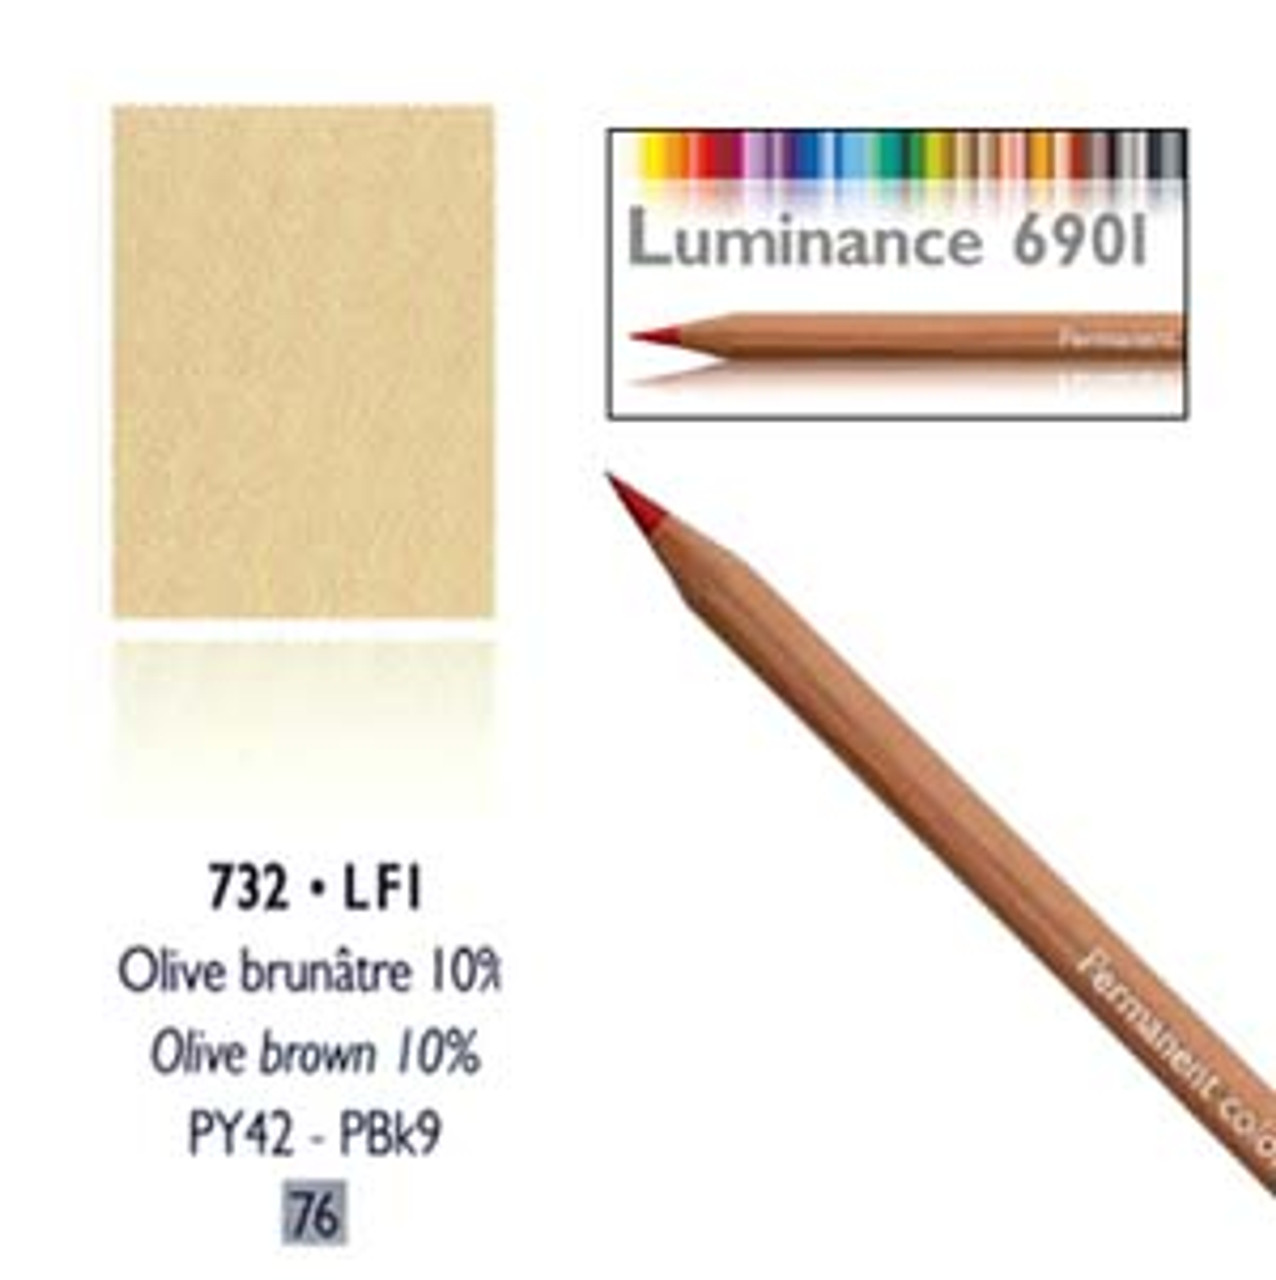 Caran d'Ache Luminance 6901 Colored Pencil 732 Brown Olive 10%